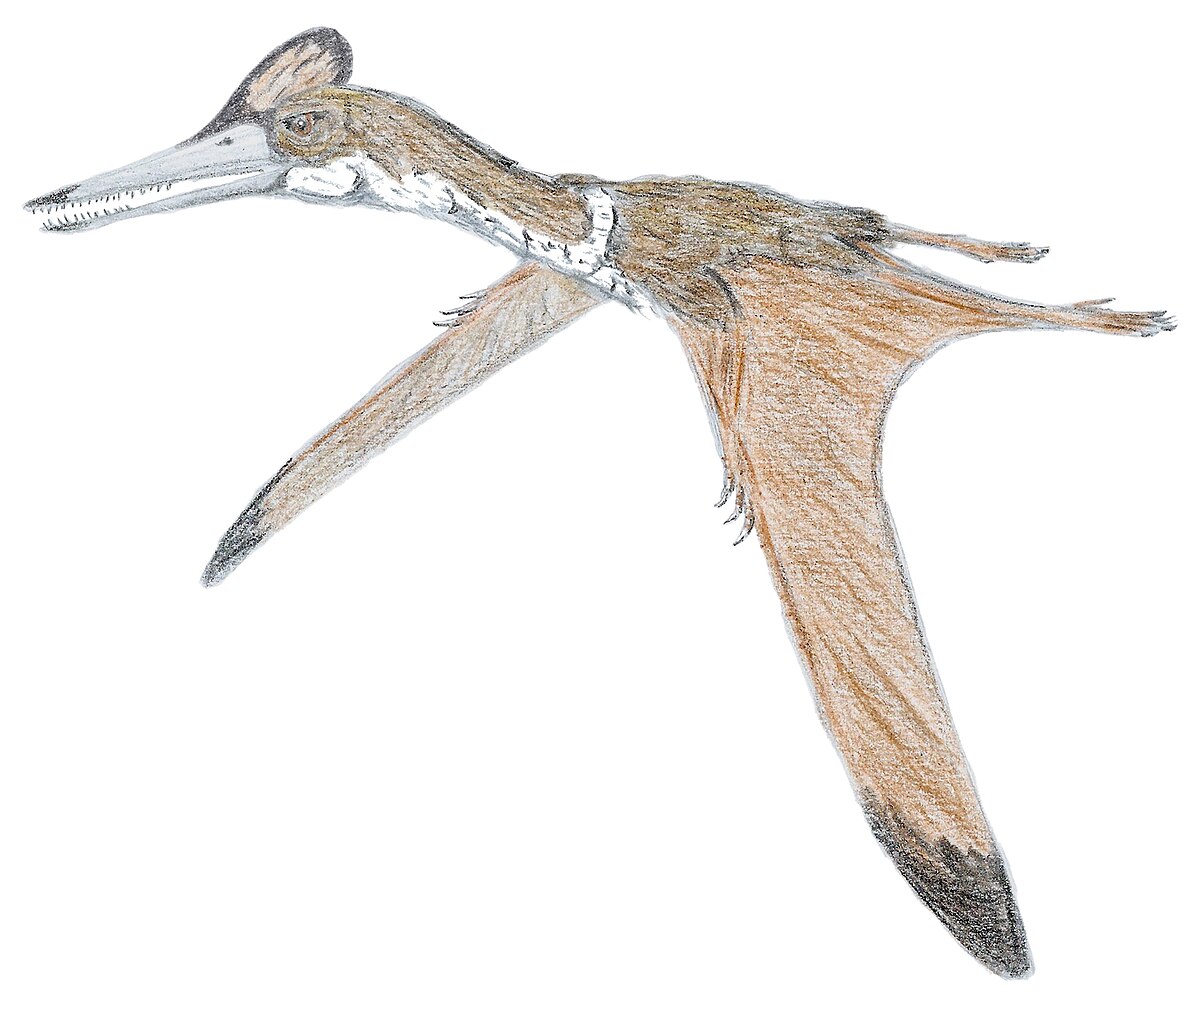 Kryptodrakon progenitor Basal Member of the Pterodactyloidea